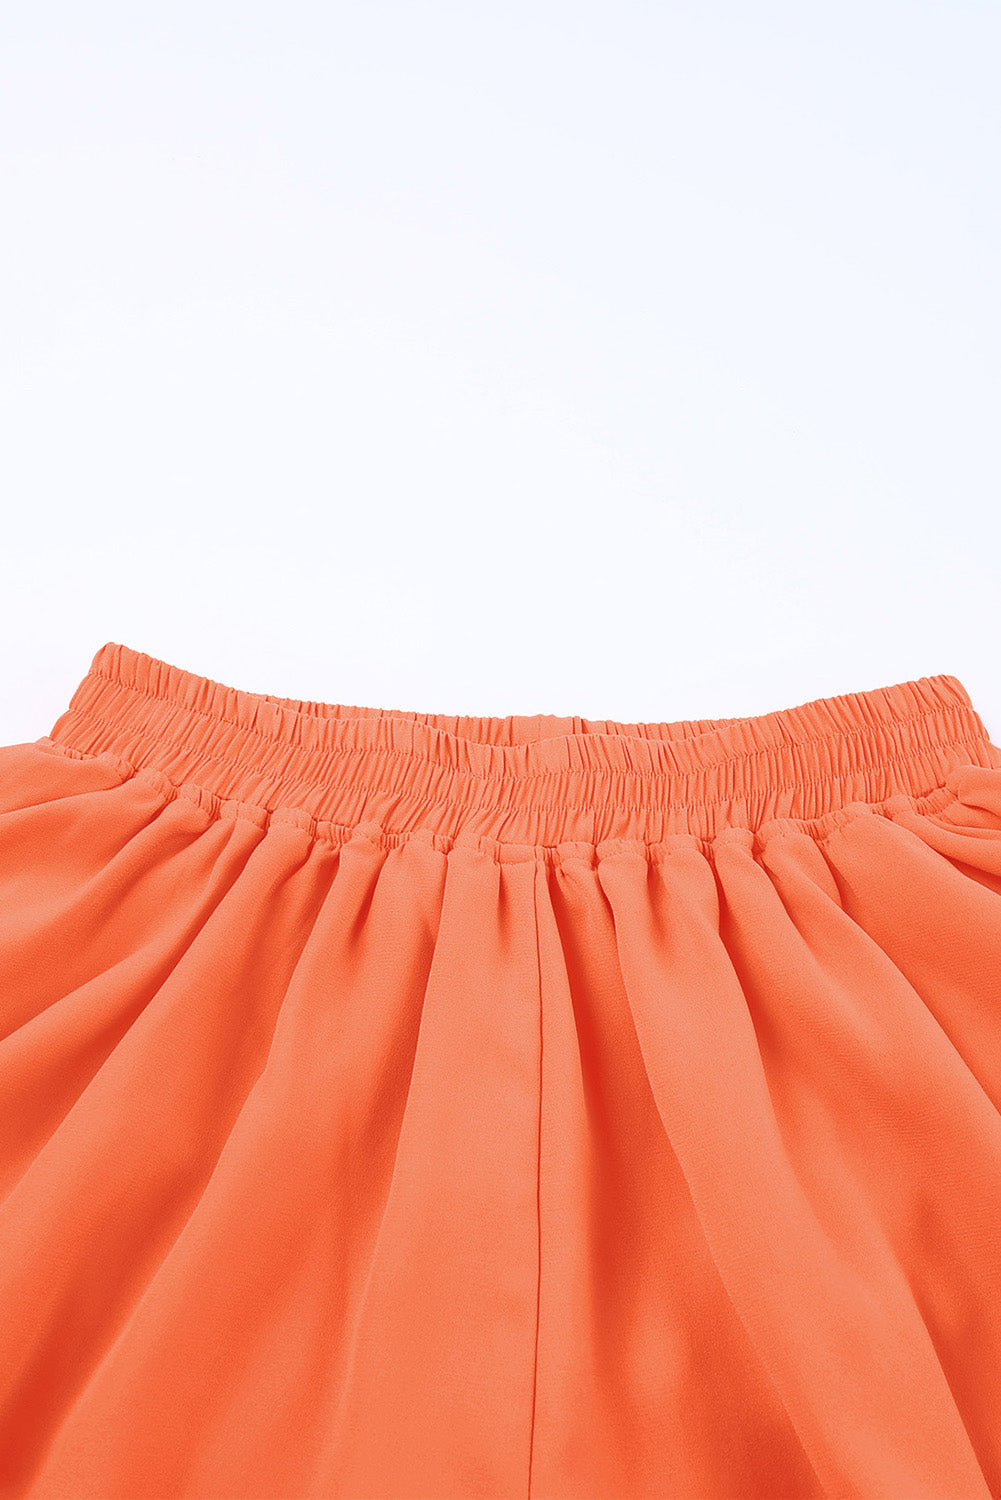 Reddish Orange Layered Sports Skirt